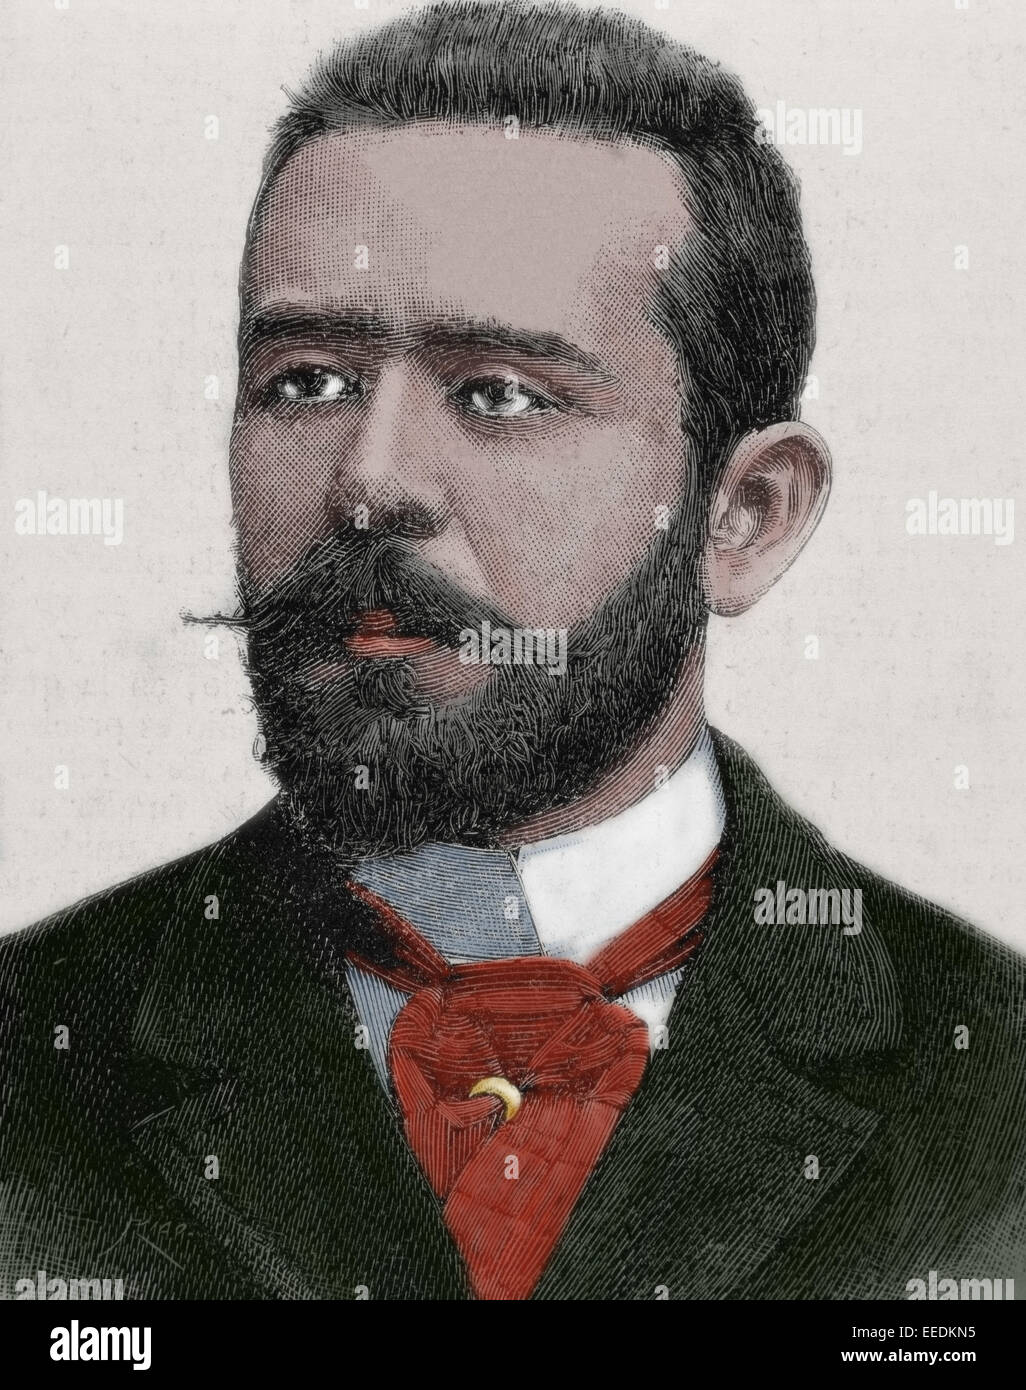 Narciso Diaz de Escovar (1860-1935). Spanish poet and writer. Portrait - narciso-diaz-de-escovar-1860-1935-spanish-poet-and-writer-portrait-EEDKN5